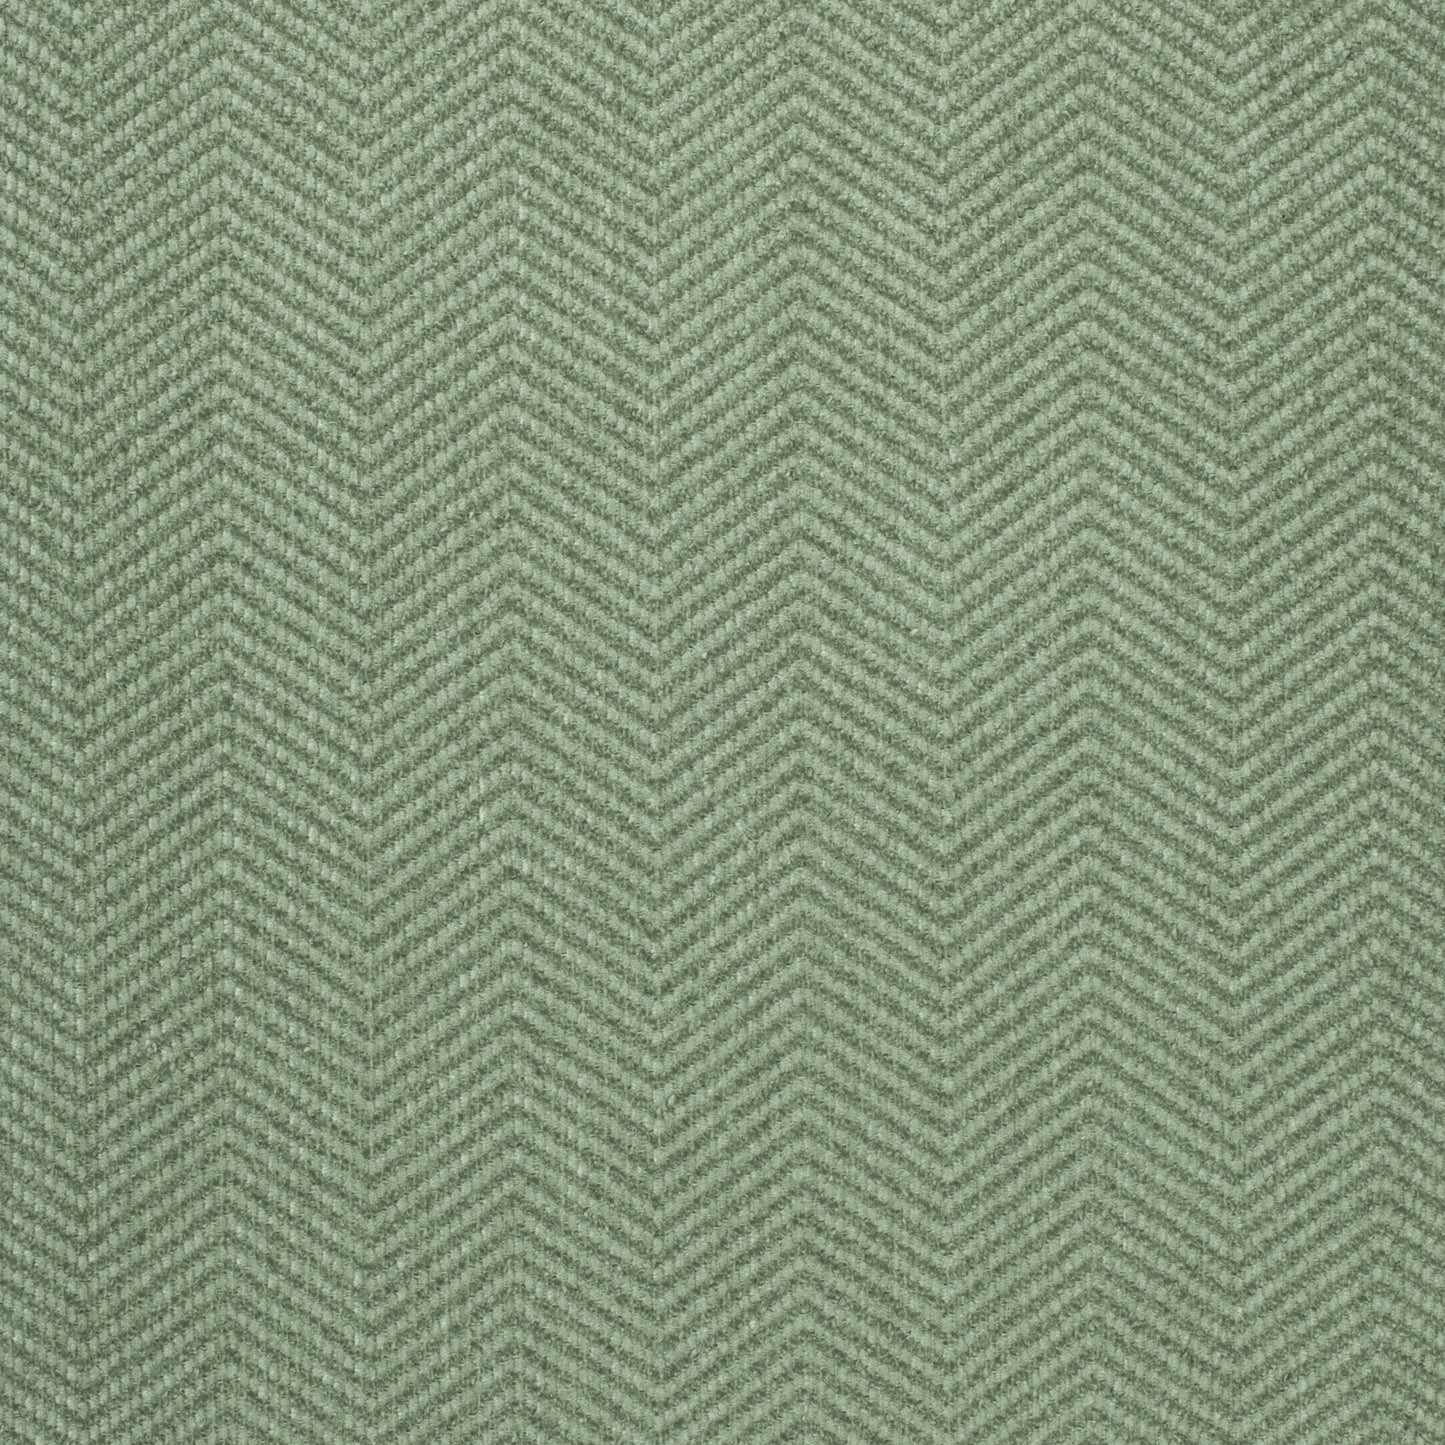 Purchase Thibaut Fabric Item W80623 pattern name Dalton Herringbone color Celadon